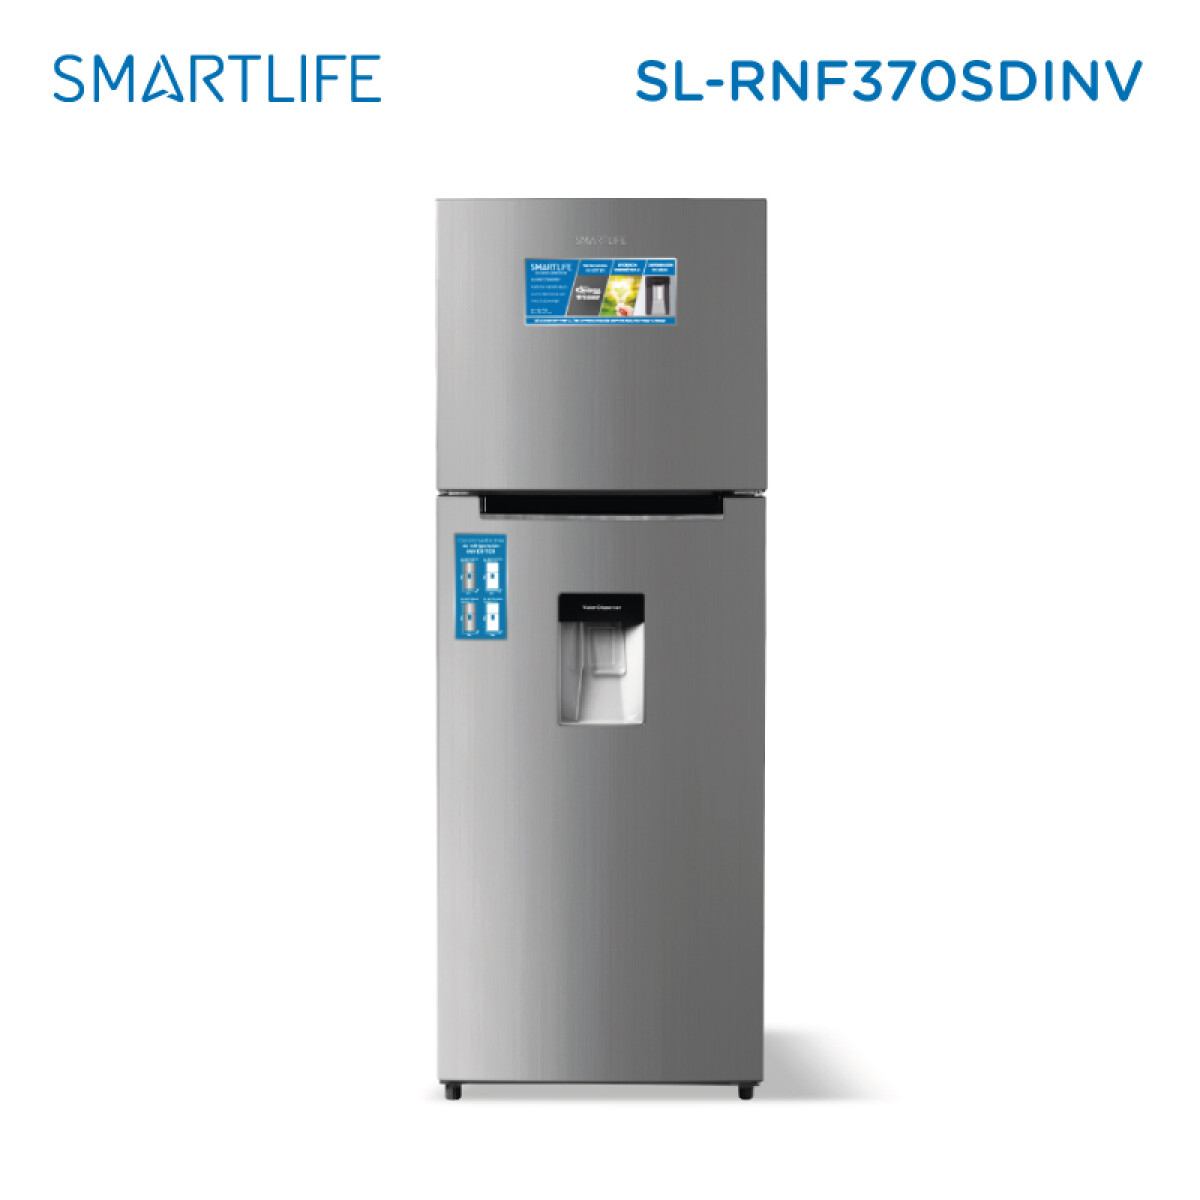 Smartlife Refrigerador Sl-rnf370sdinv Inox 